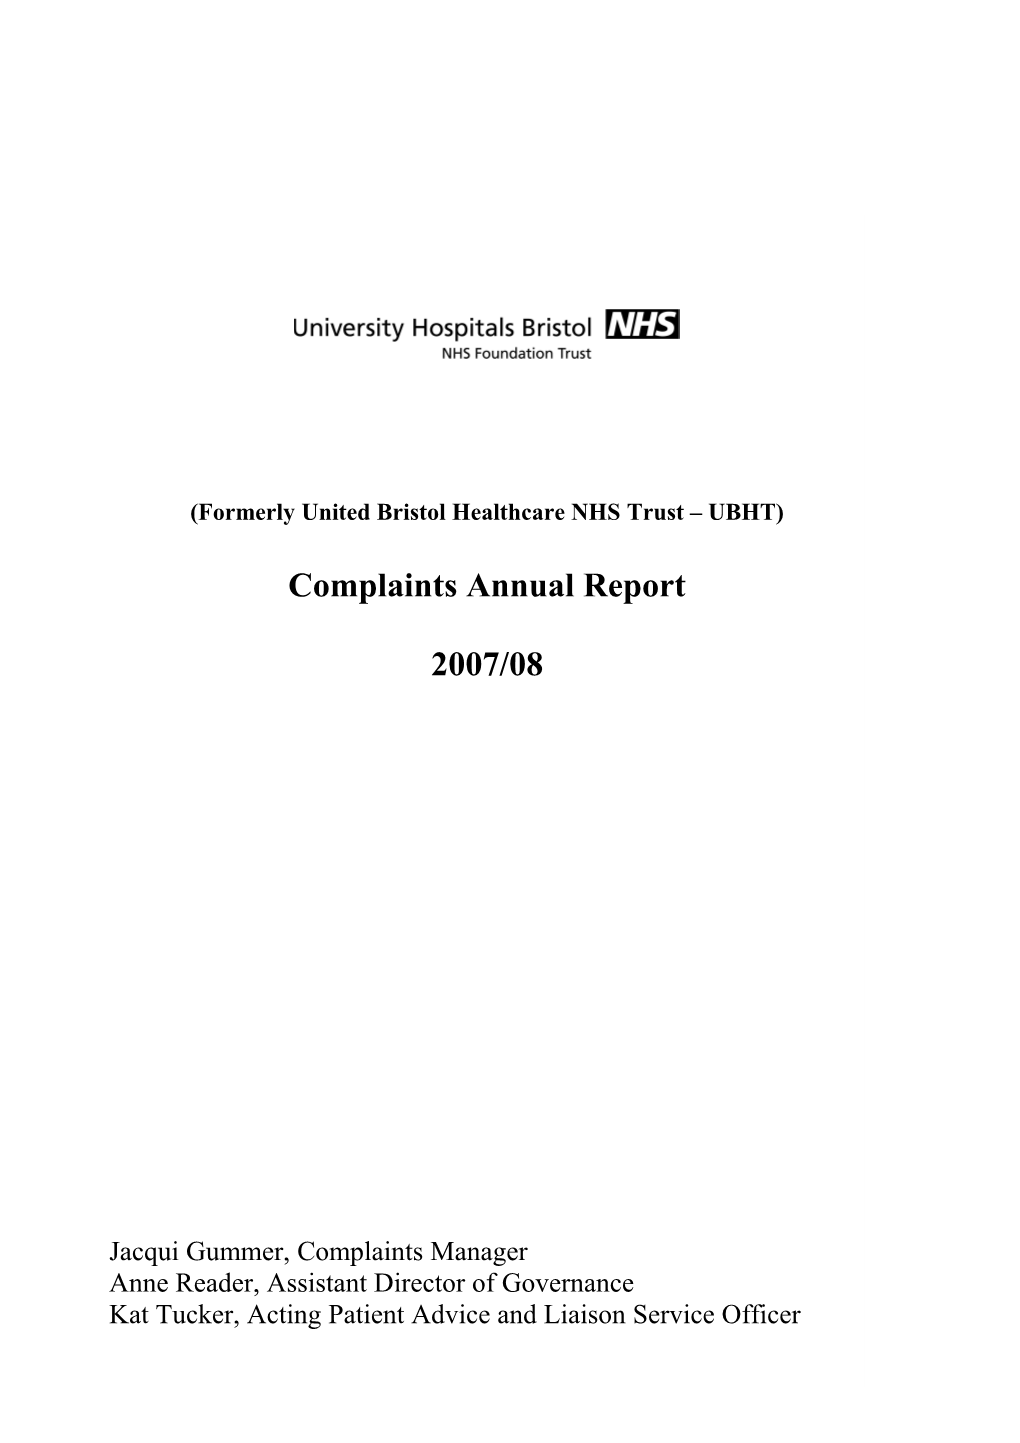 Annual Report on Patient Complaints 2005 - 2006